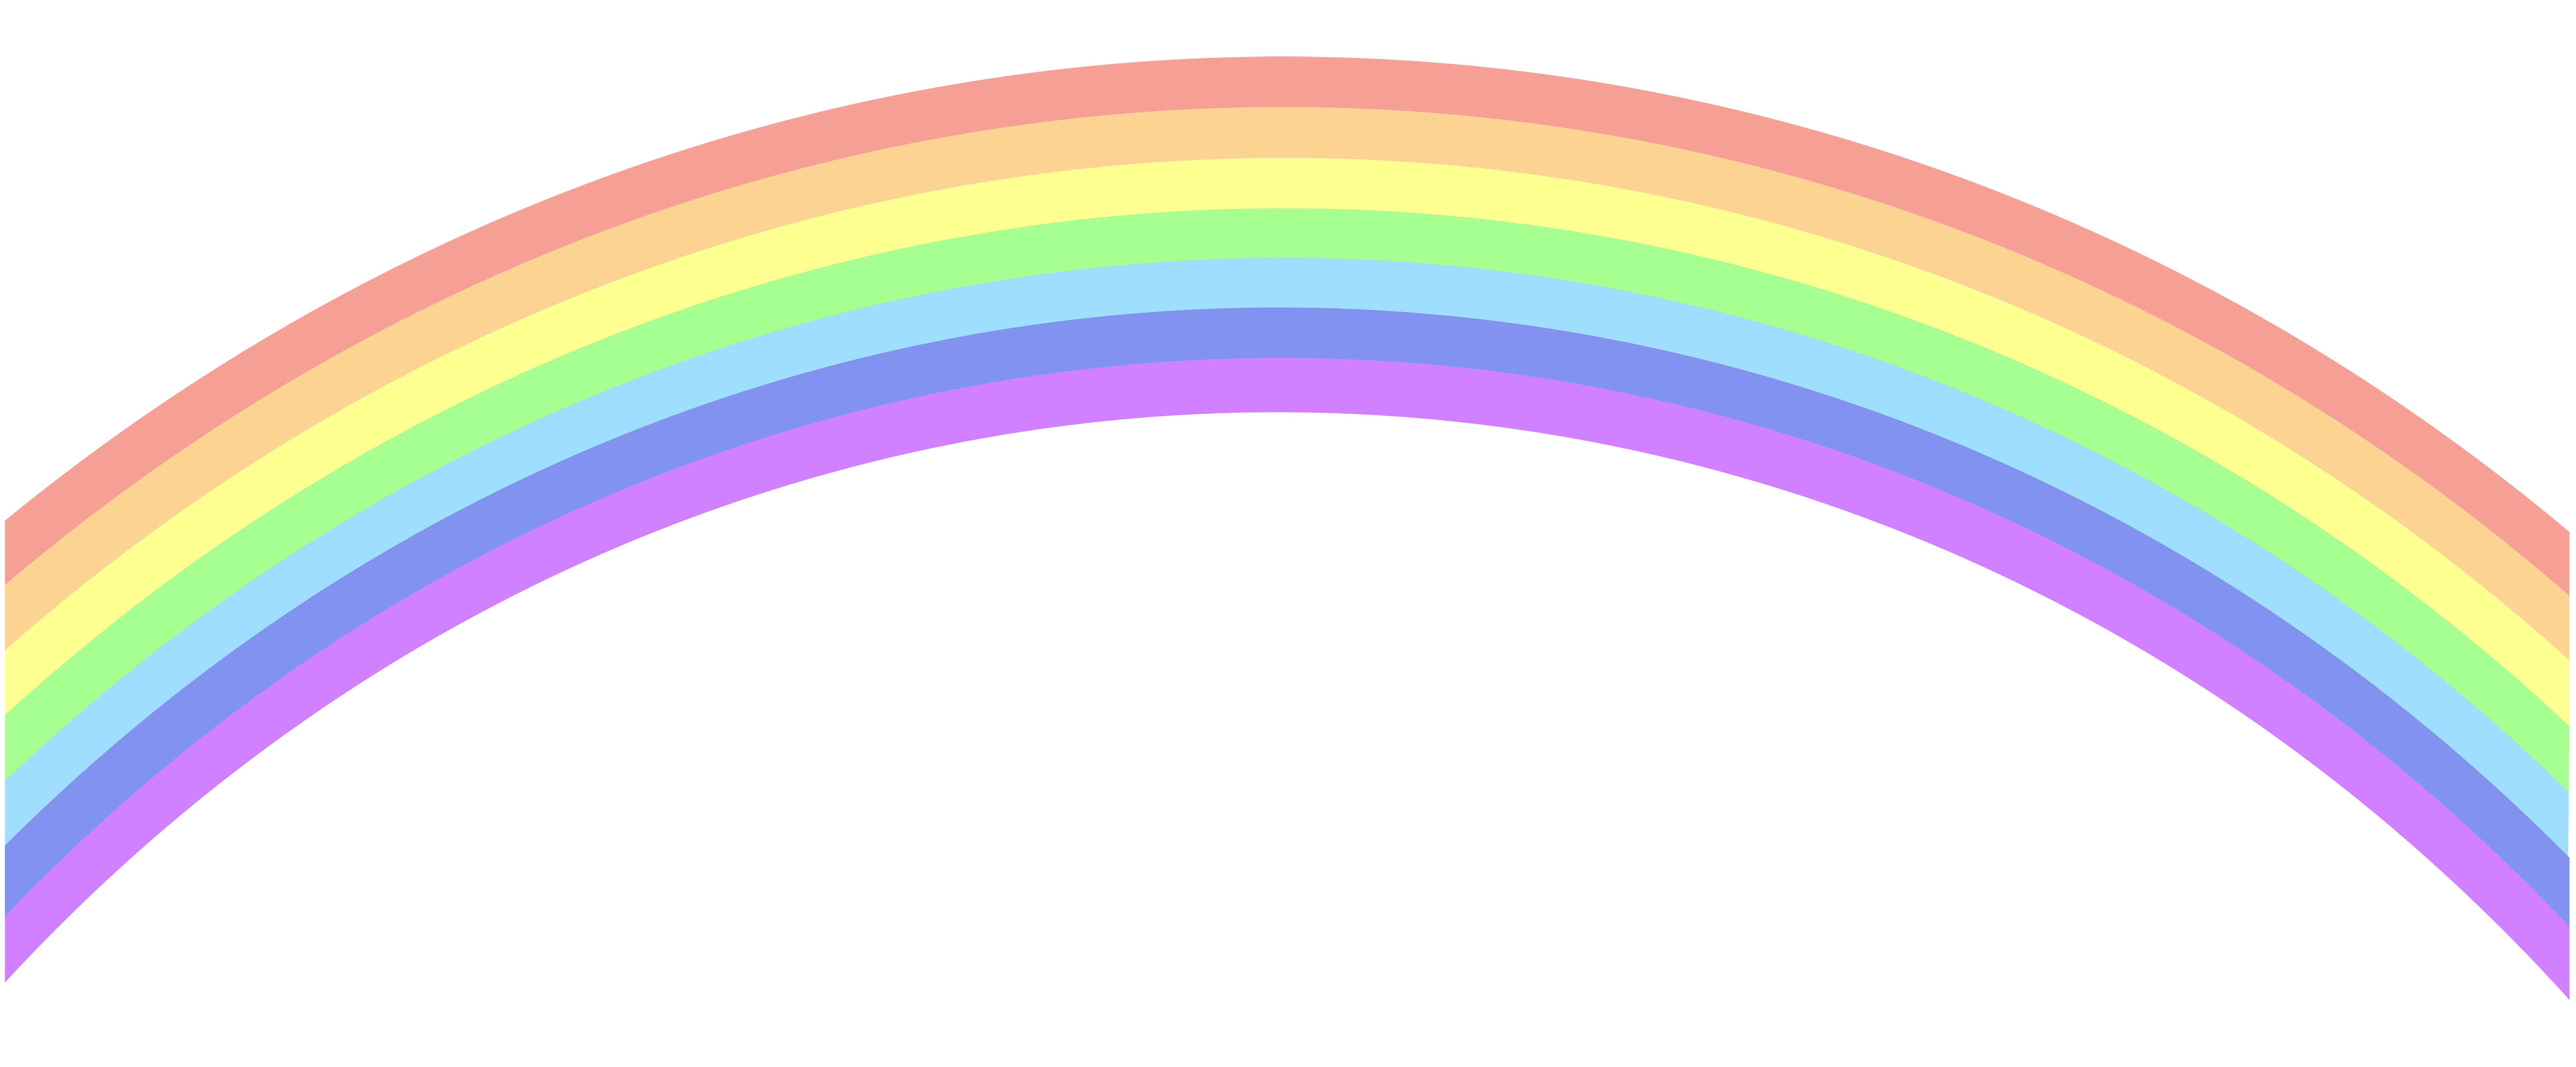 Rainbow ROYGBIV Clip art - Pastel Rainbow Cliparts png download - 5076* ...